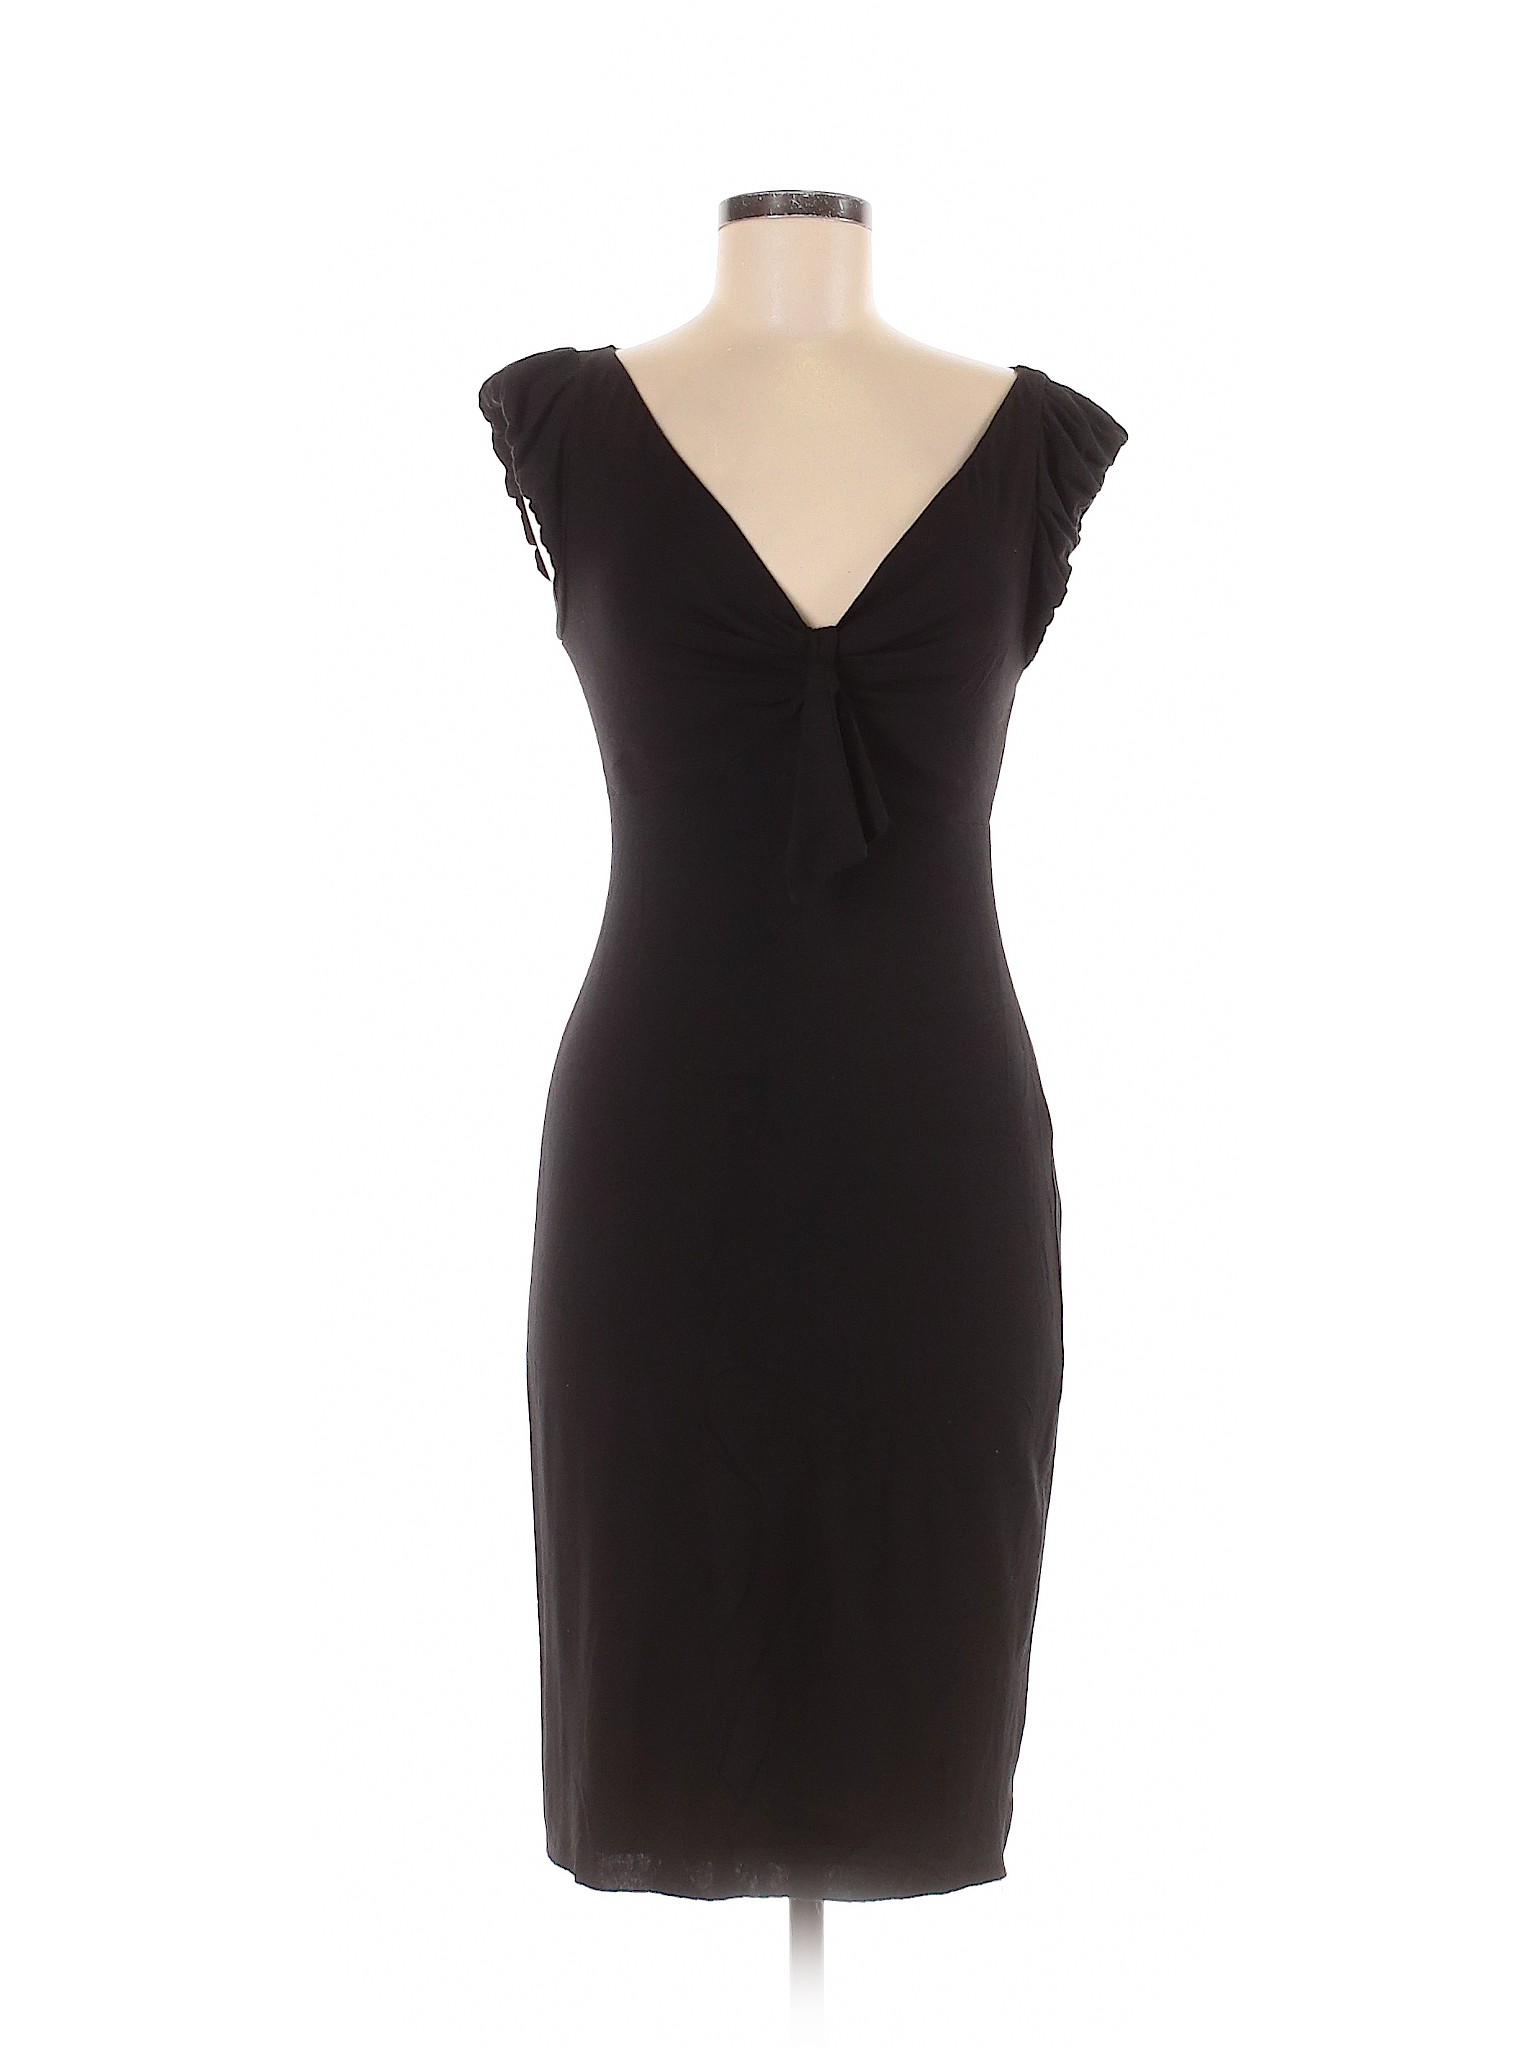 Bailey 44 Women Black Cocktail Dress M | eBay